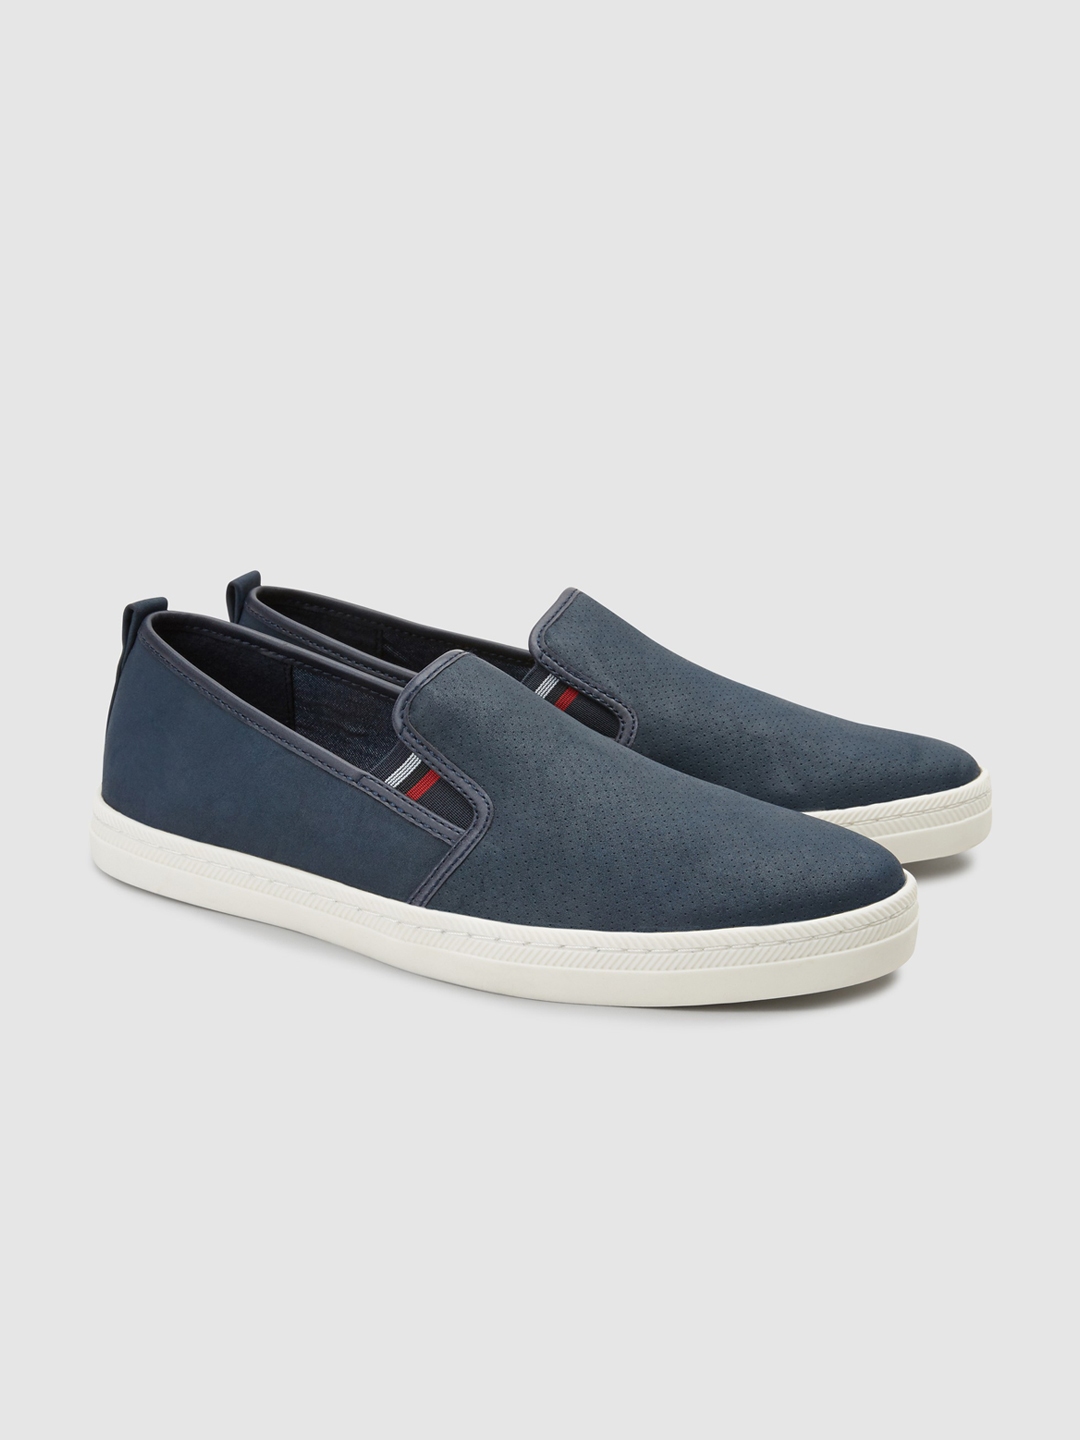 Buy Next Men Navy Blue Slip On Sneakers - Casual Shoes for Men 9237157 ...